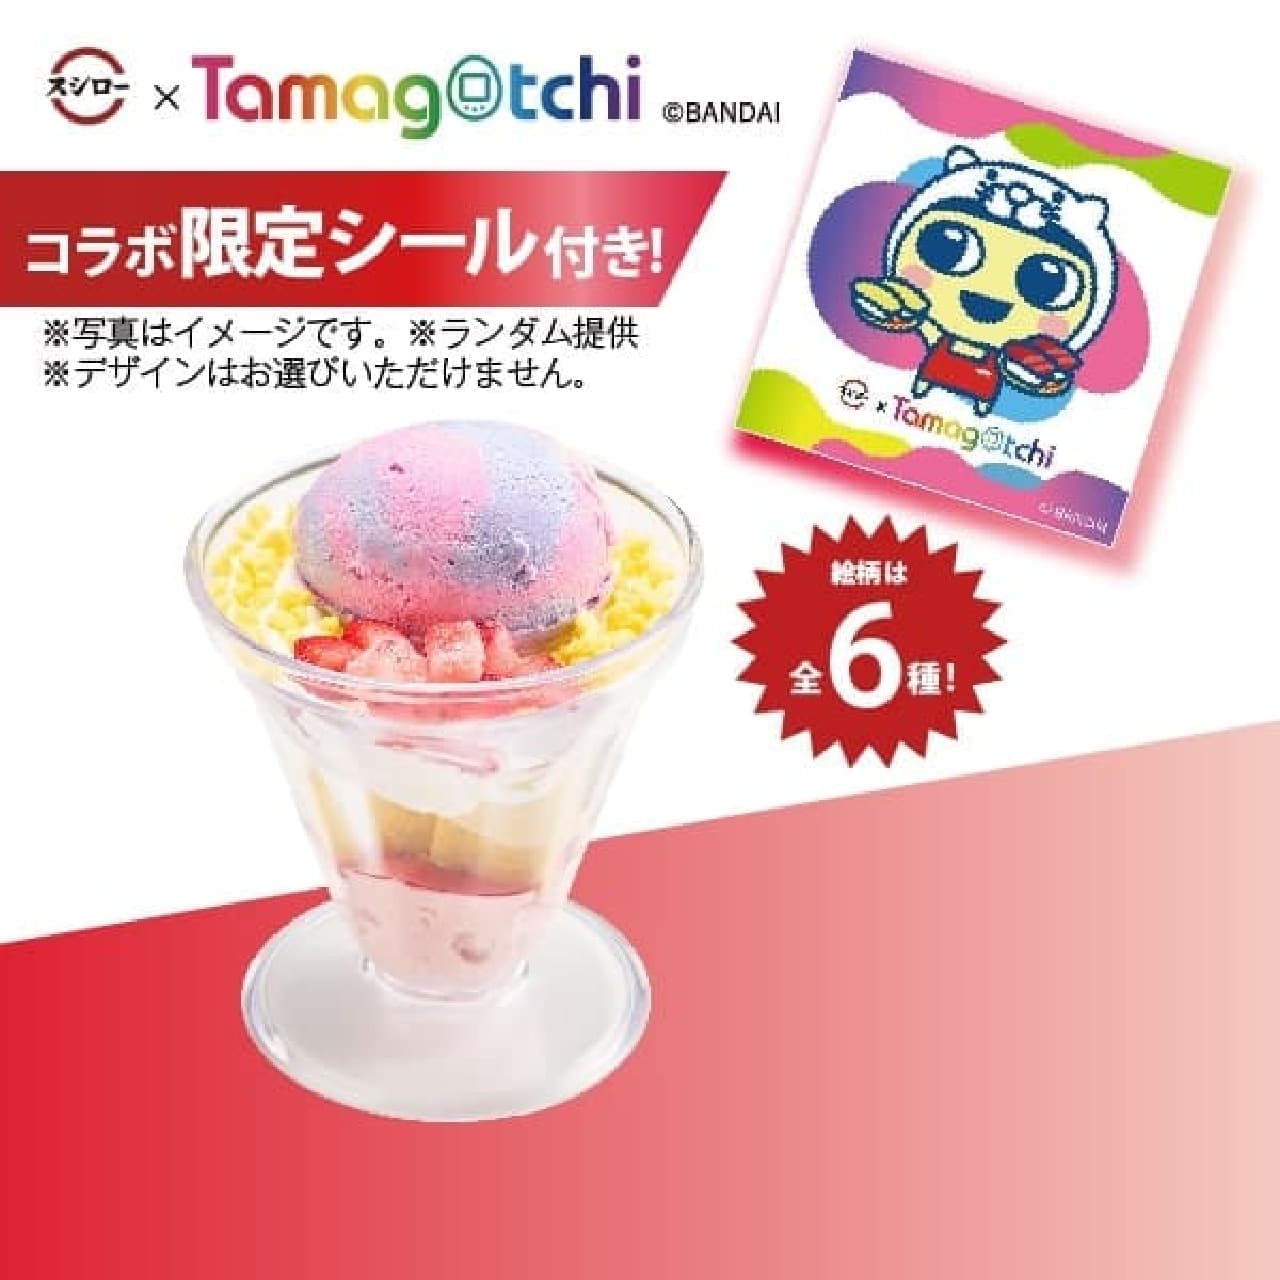 Sushiro "Slightly Pop Tamagotchi Berry Parfait